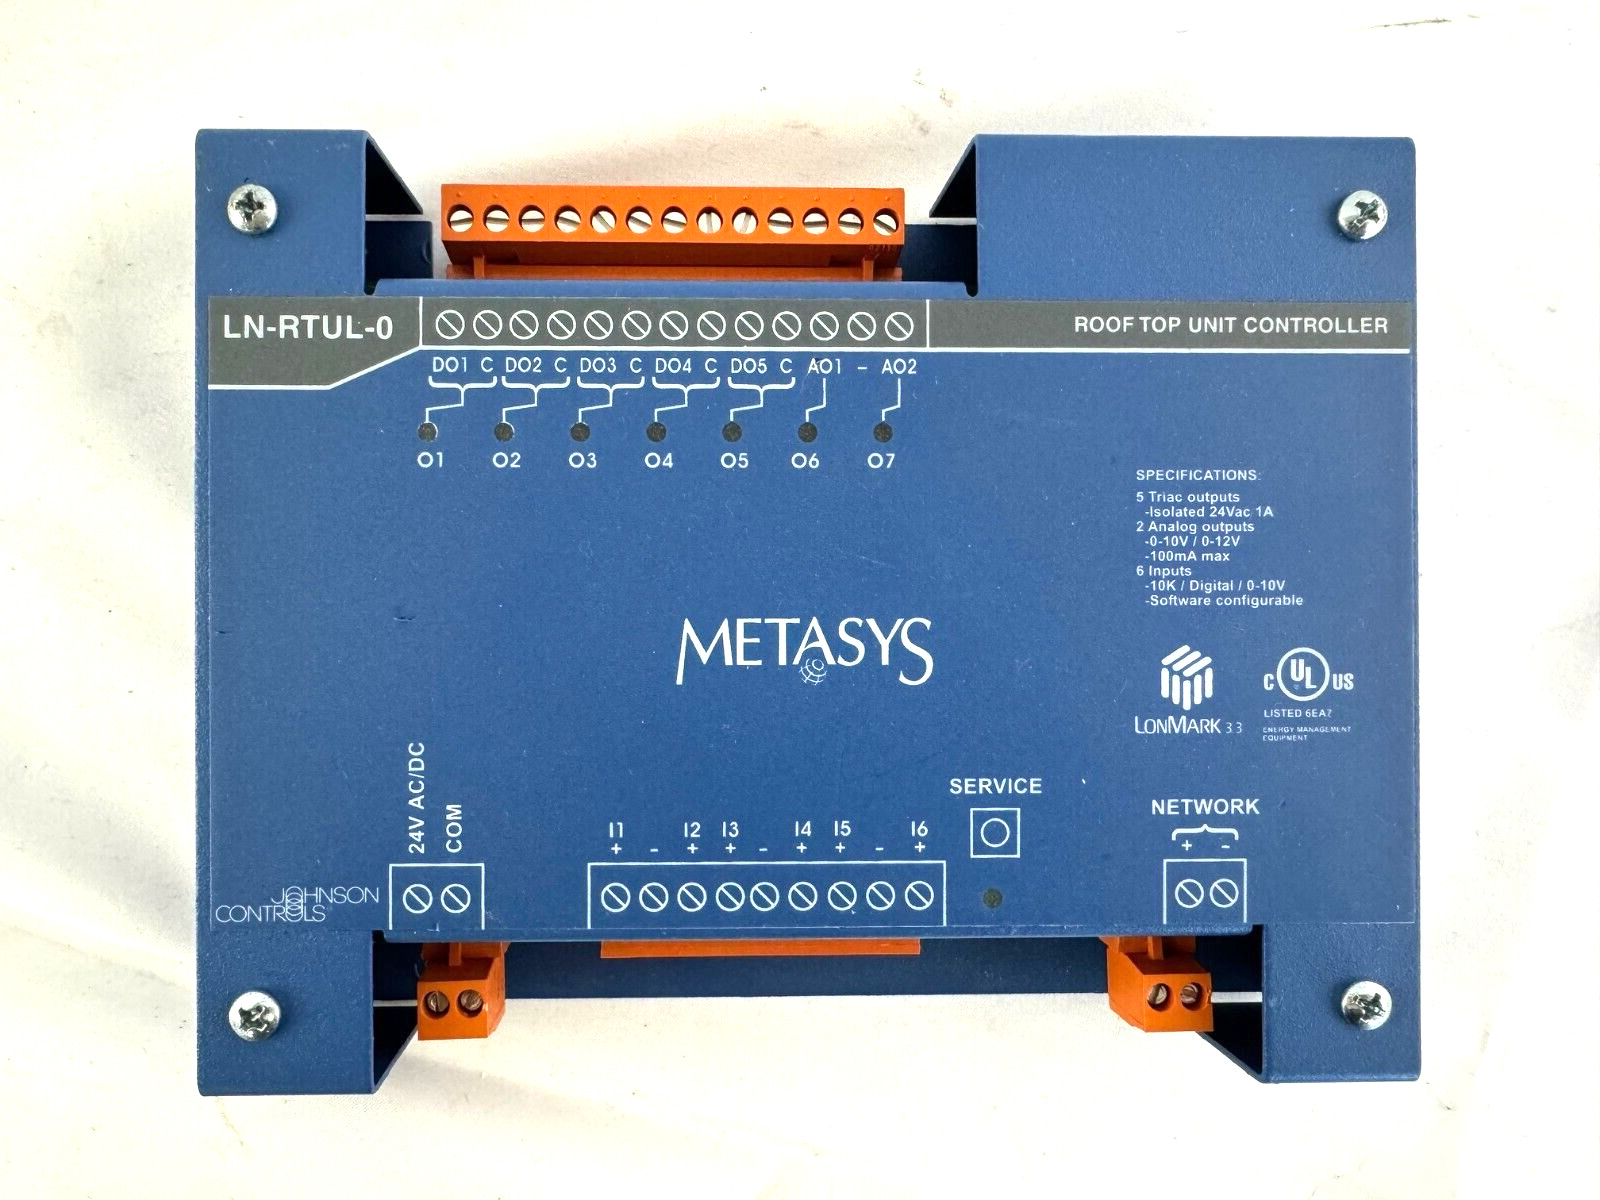 Johnson Controls Metasys LN-RTUL-0 Roof Top Unit Controller